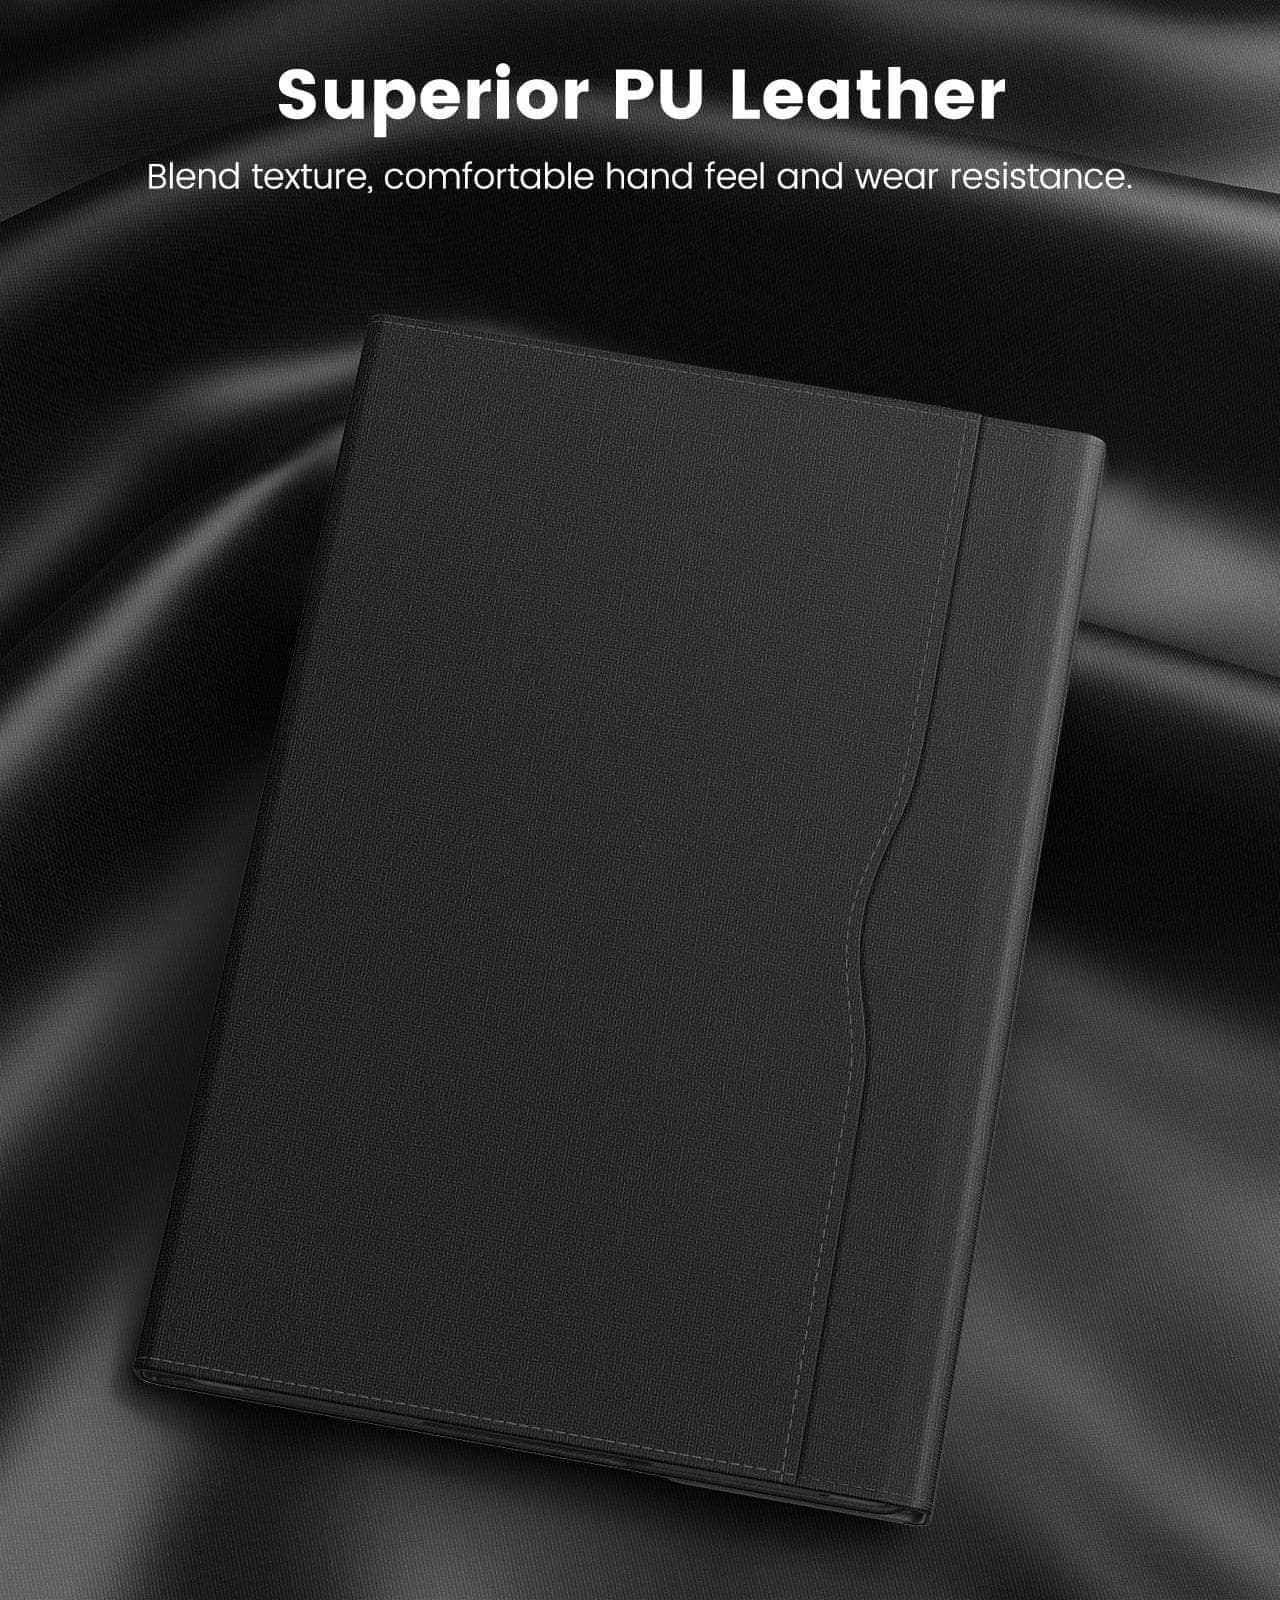 Casebuddy MoKo Galaxy Tab S9+ 2023 Lightweight Business Case